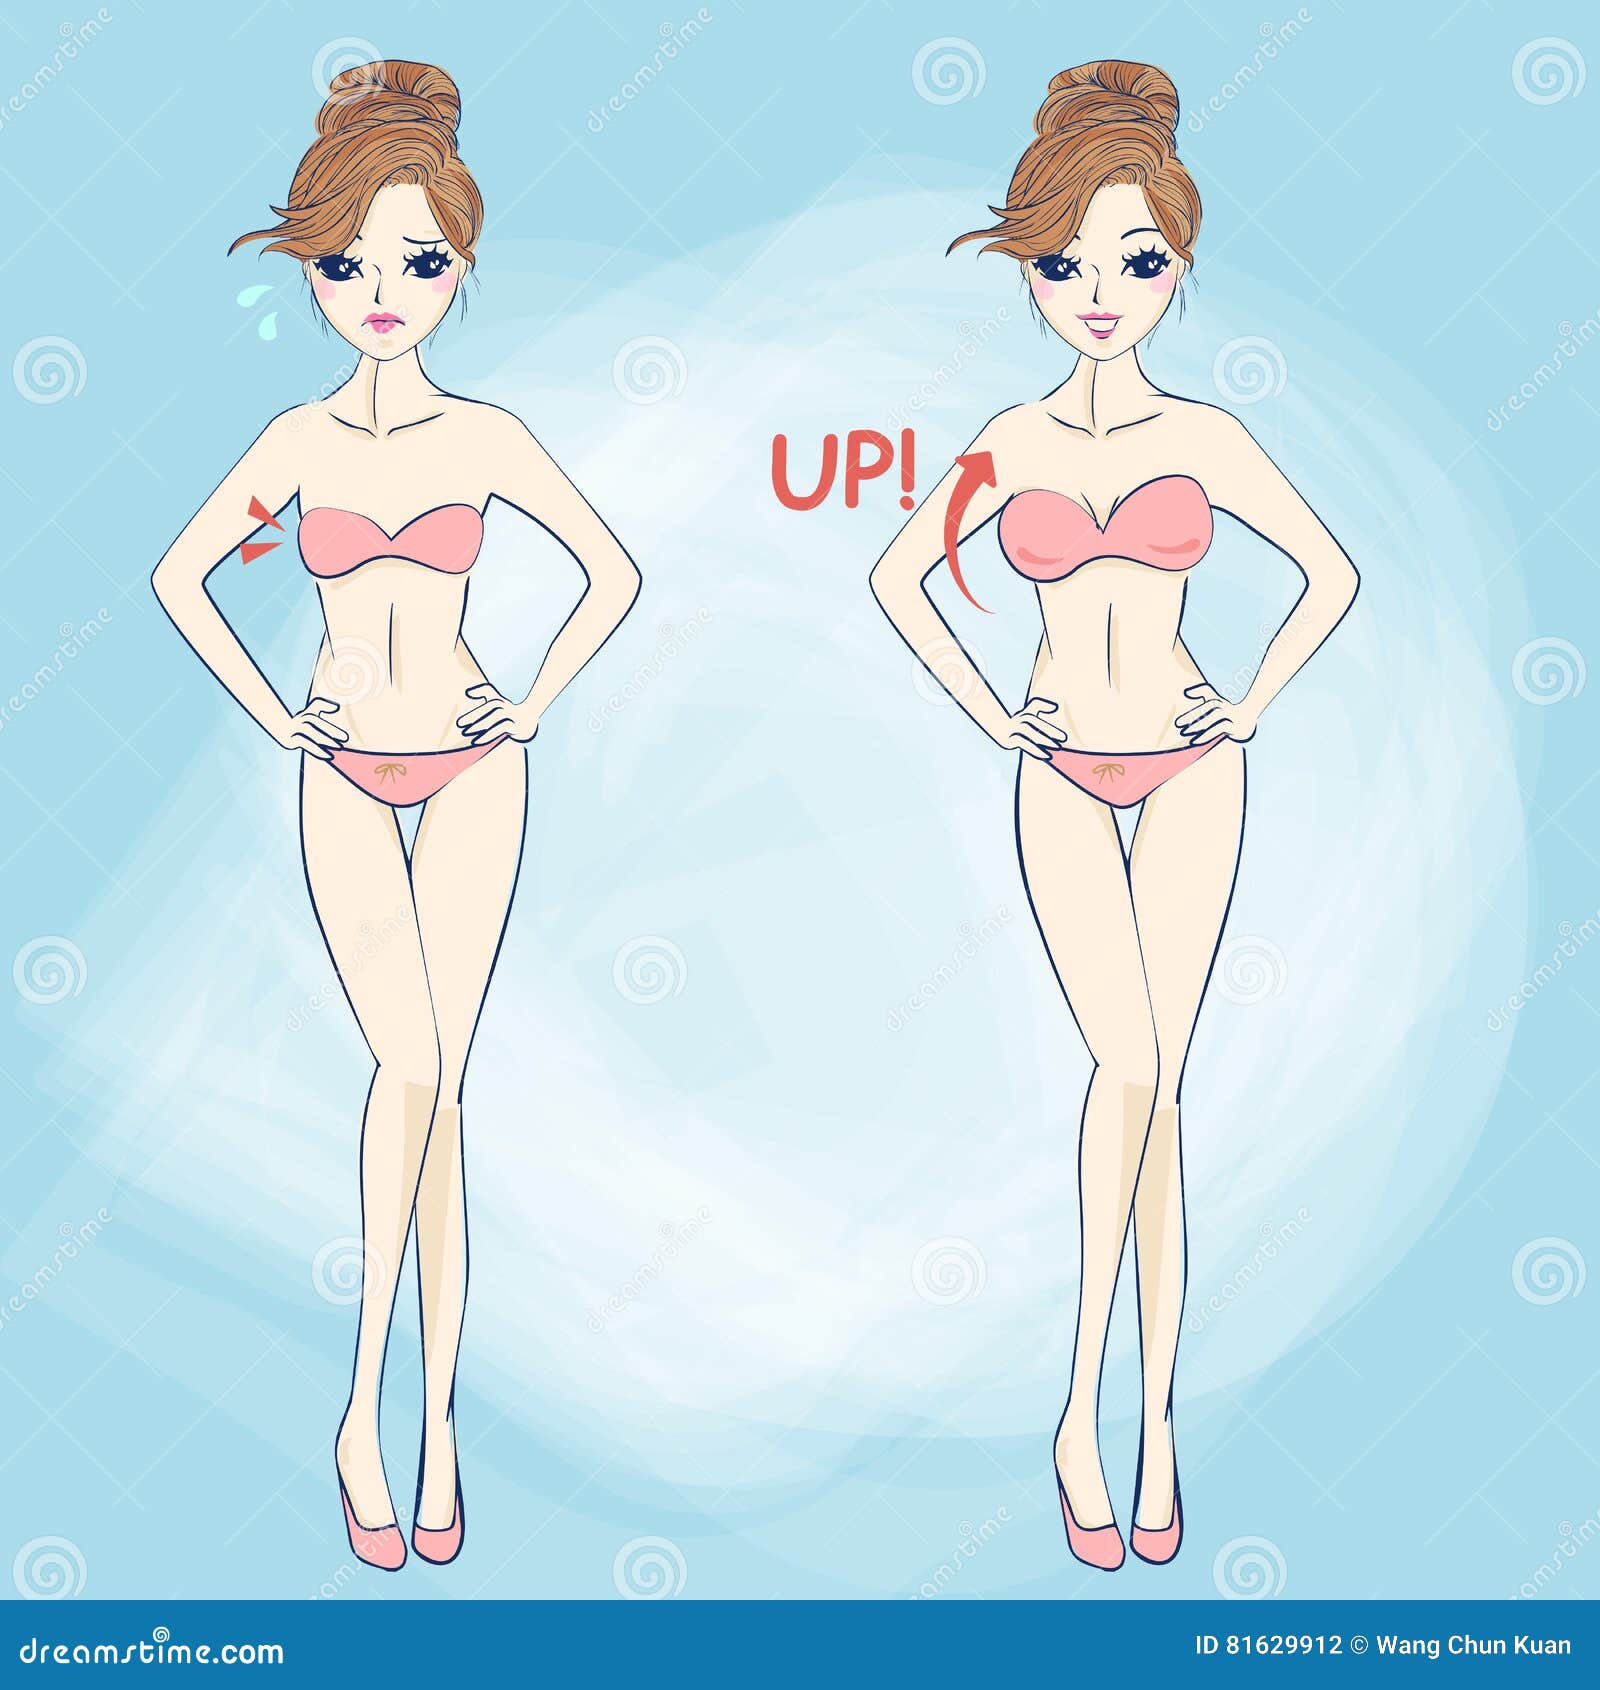 Cartooon Woman Different Cup Size Stock Vector - Illustration of abdomen,  design: 81629912